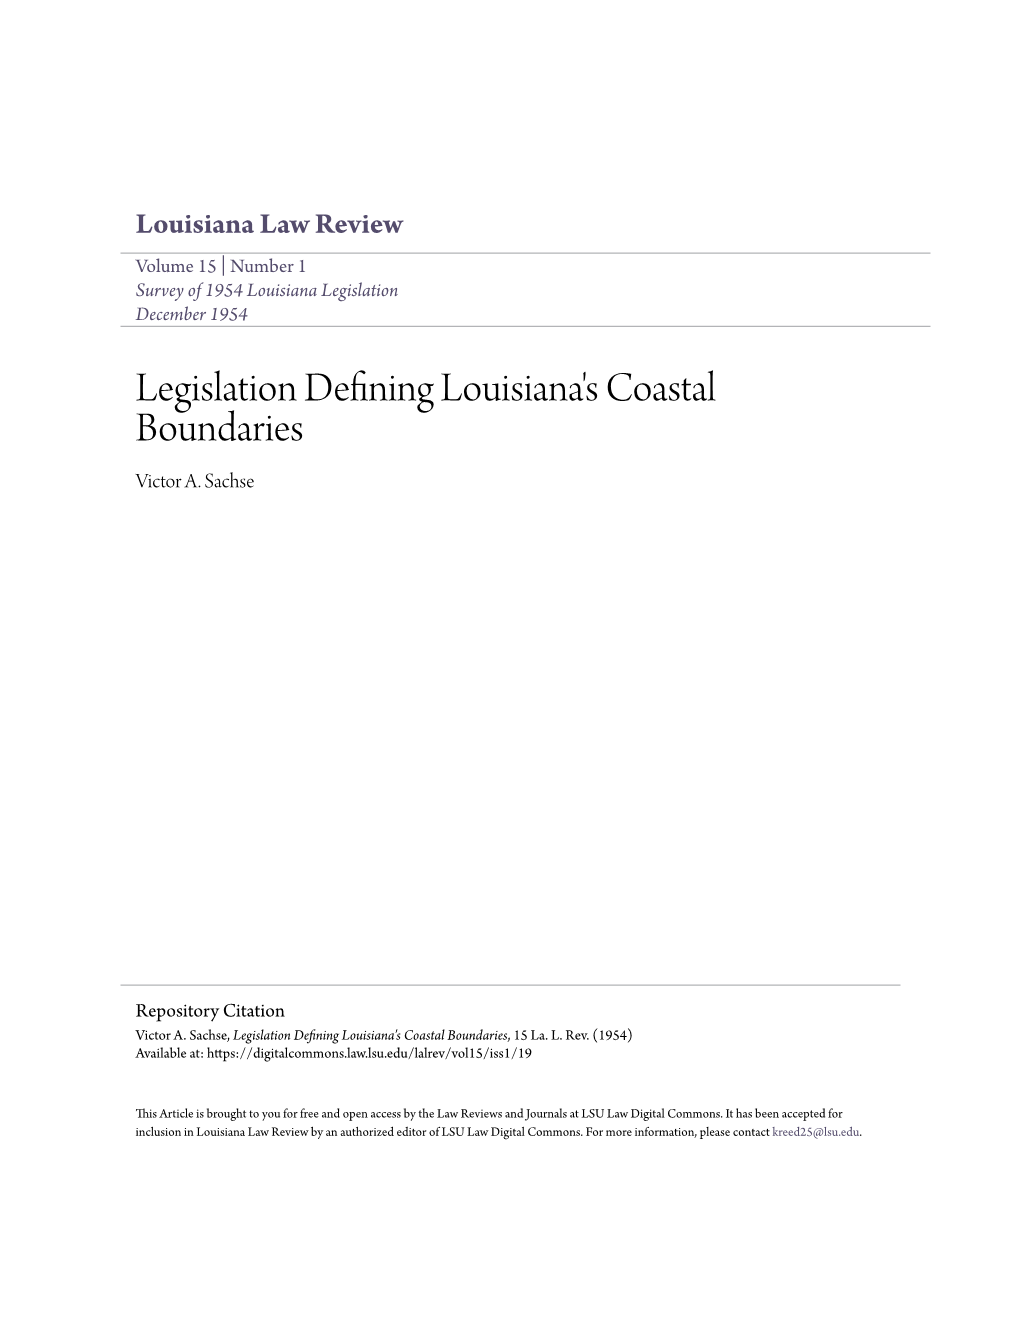 Legislation Defining Louisiana's Coastal Boundaries Victor A